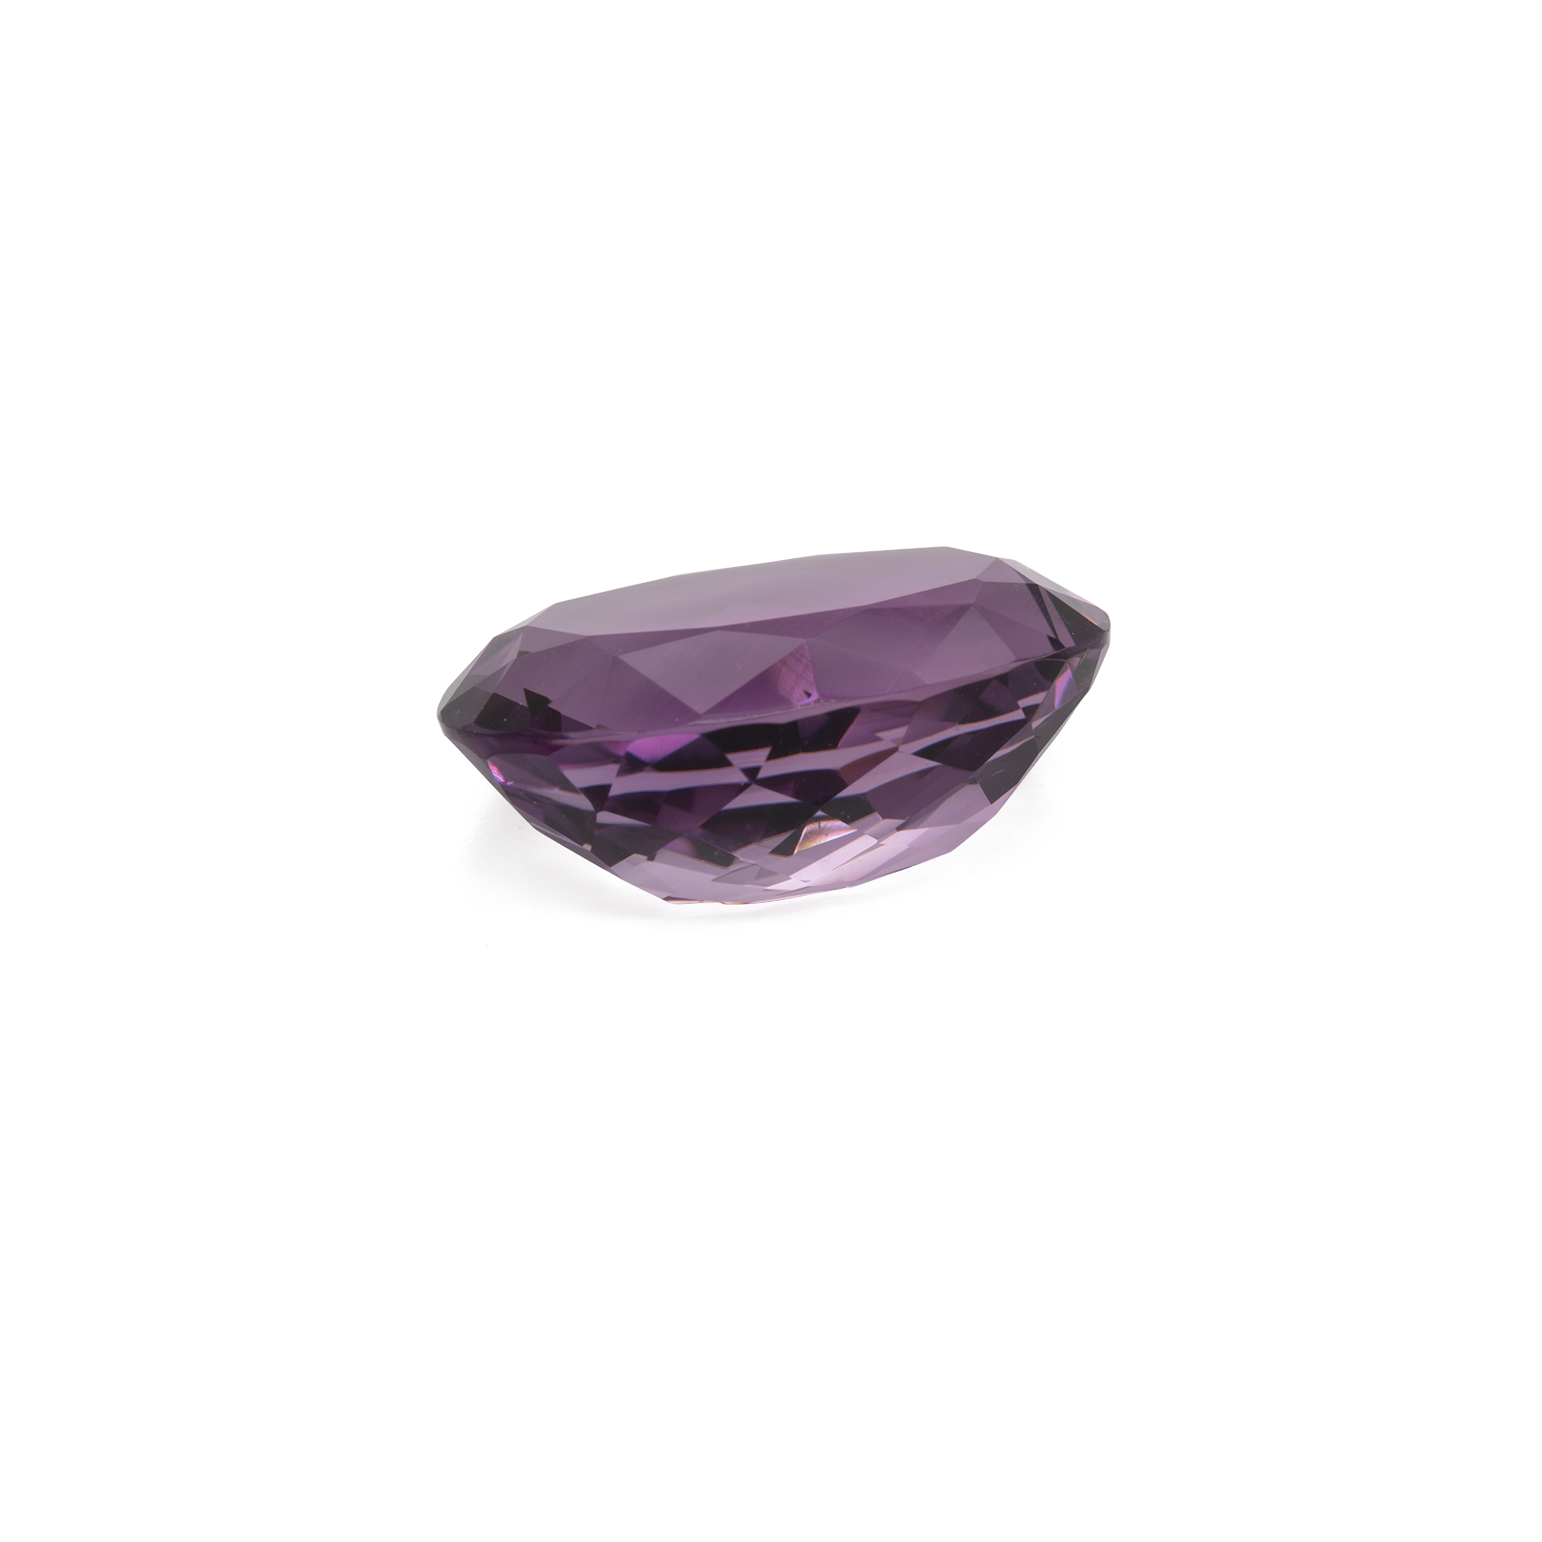 Amethyst - purple, oval, 22x16 mm, 21.00 cts, No. AMY73001